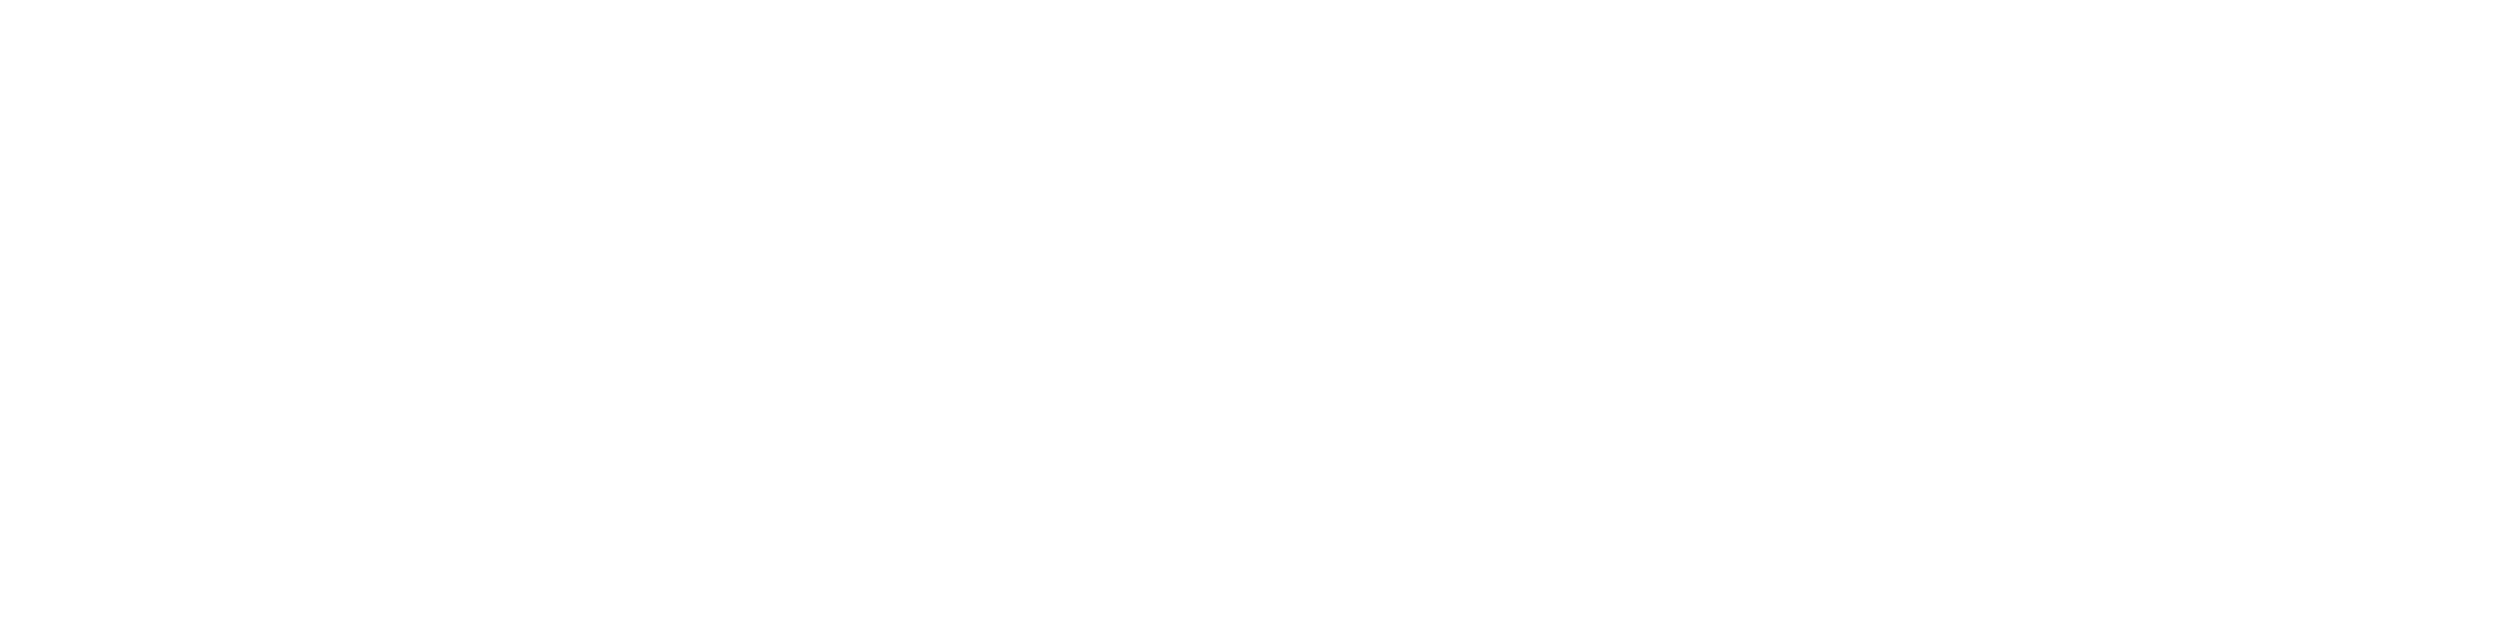 cvrx-logo.png